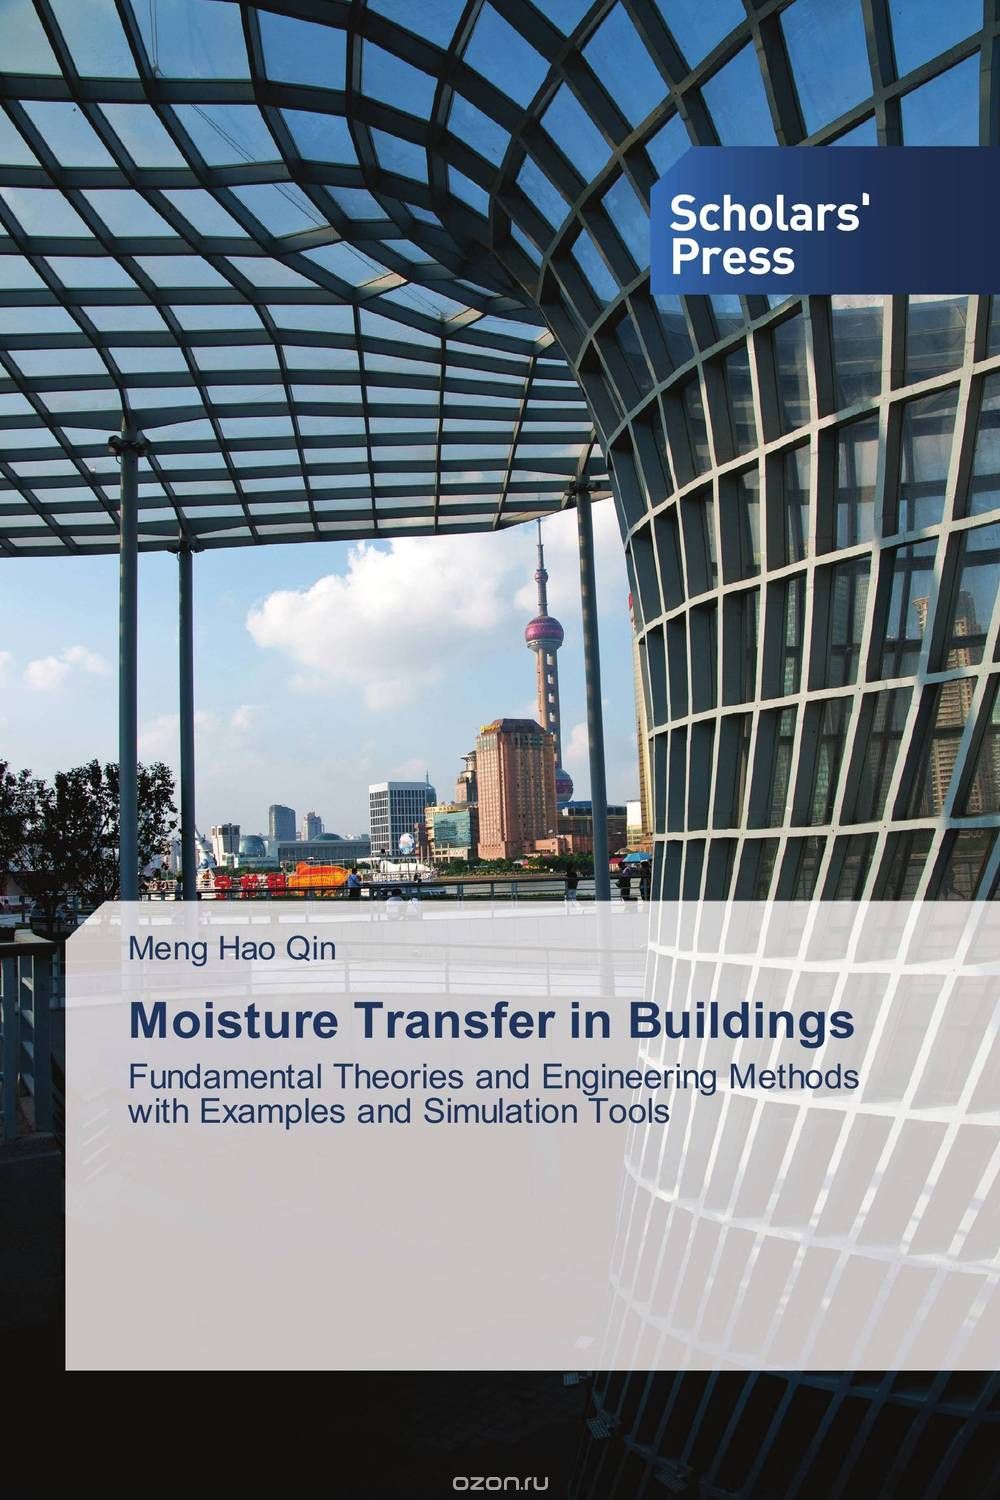 Скачать книгу "Moisture Transfer in Buildings"